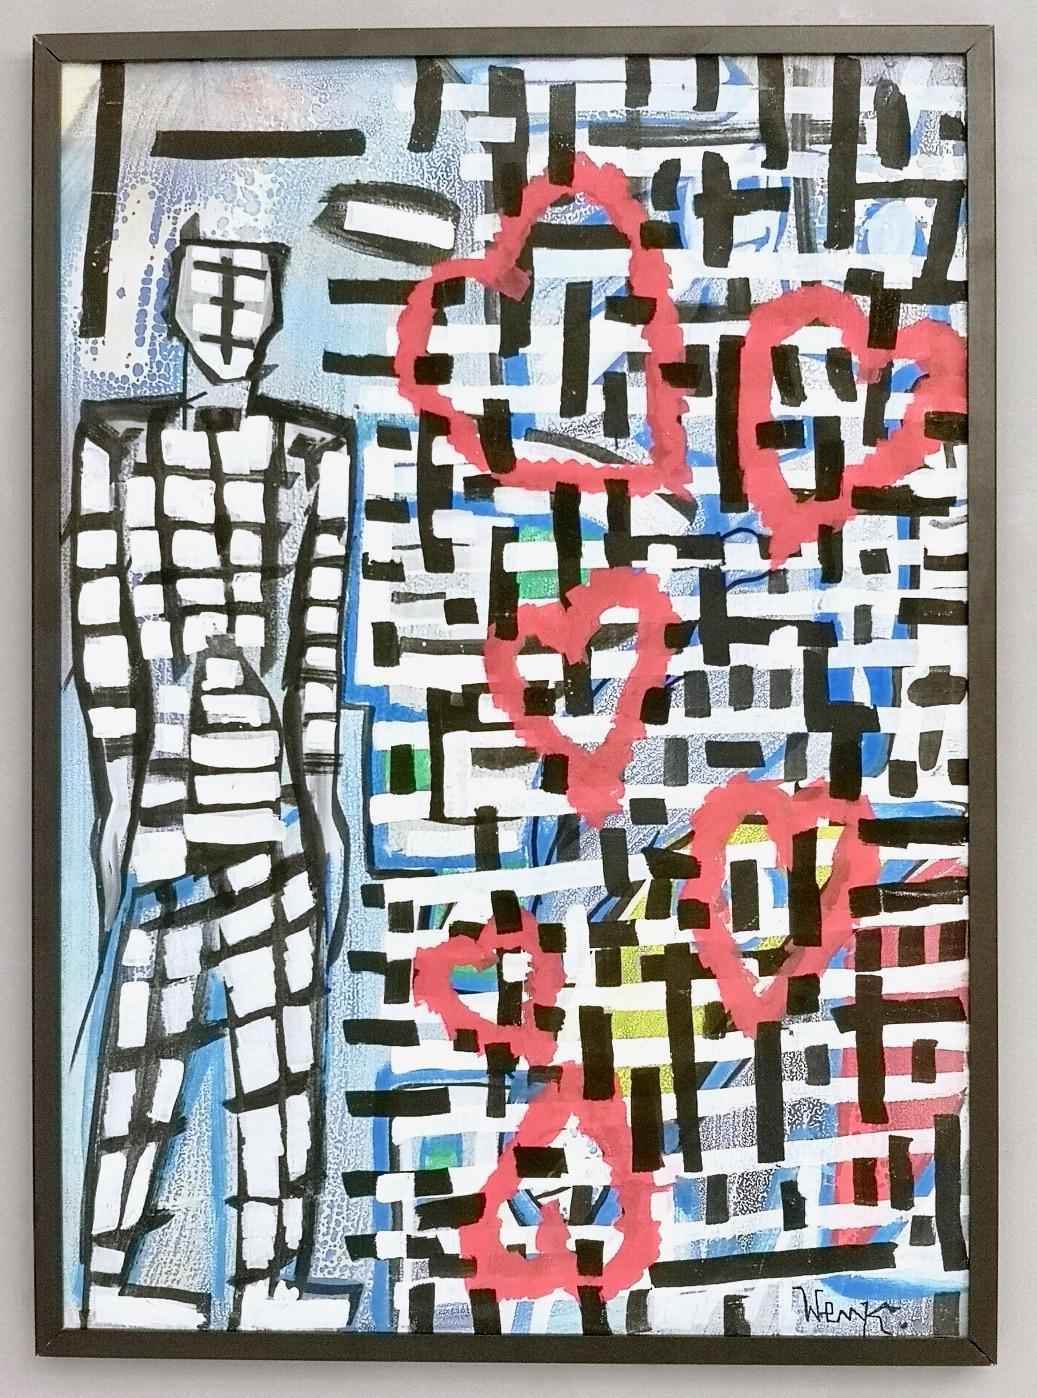 "Cuori in trappola" by Enzio Wenk 2018-Acrylic on Canvas Board, NeoExpressionism